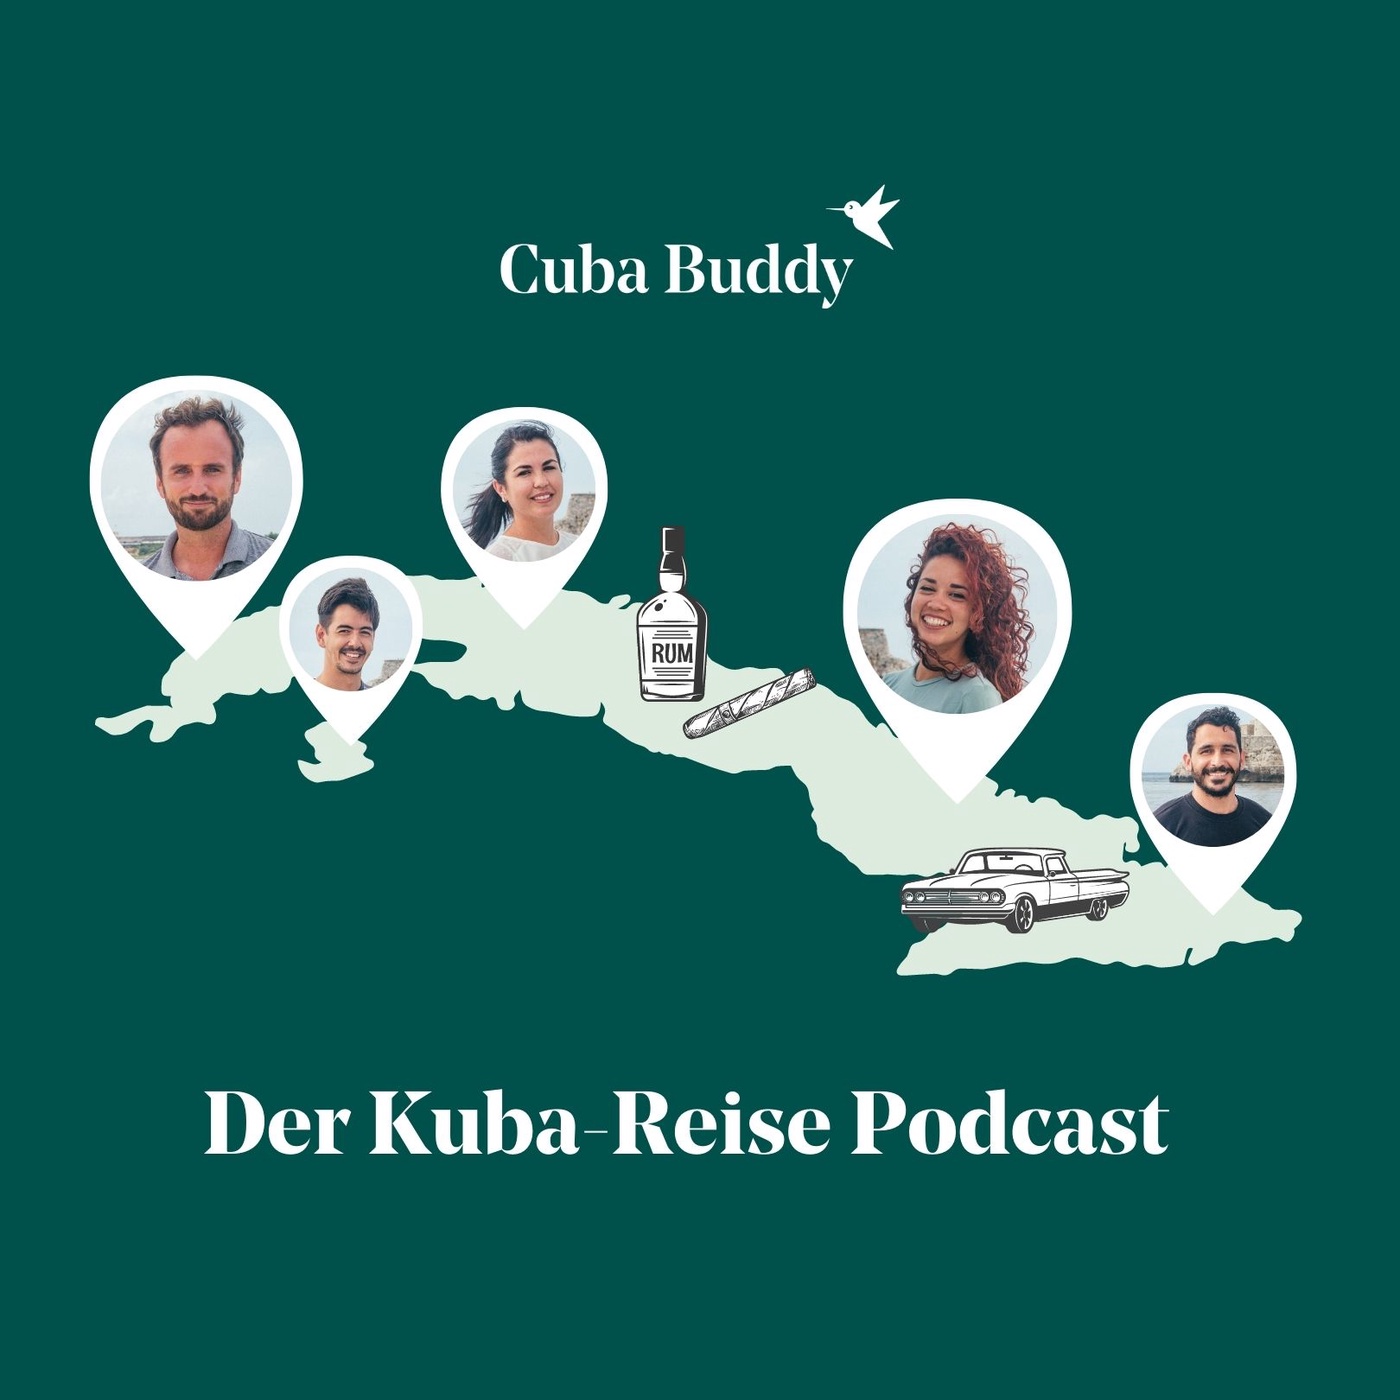 Cuba Buddy – Der Kuba-Reise Podcast